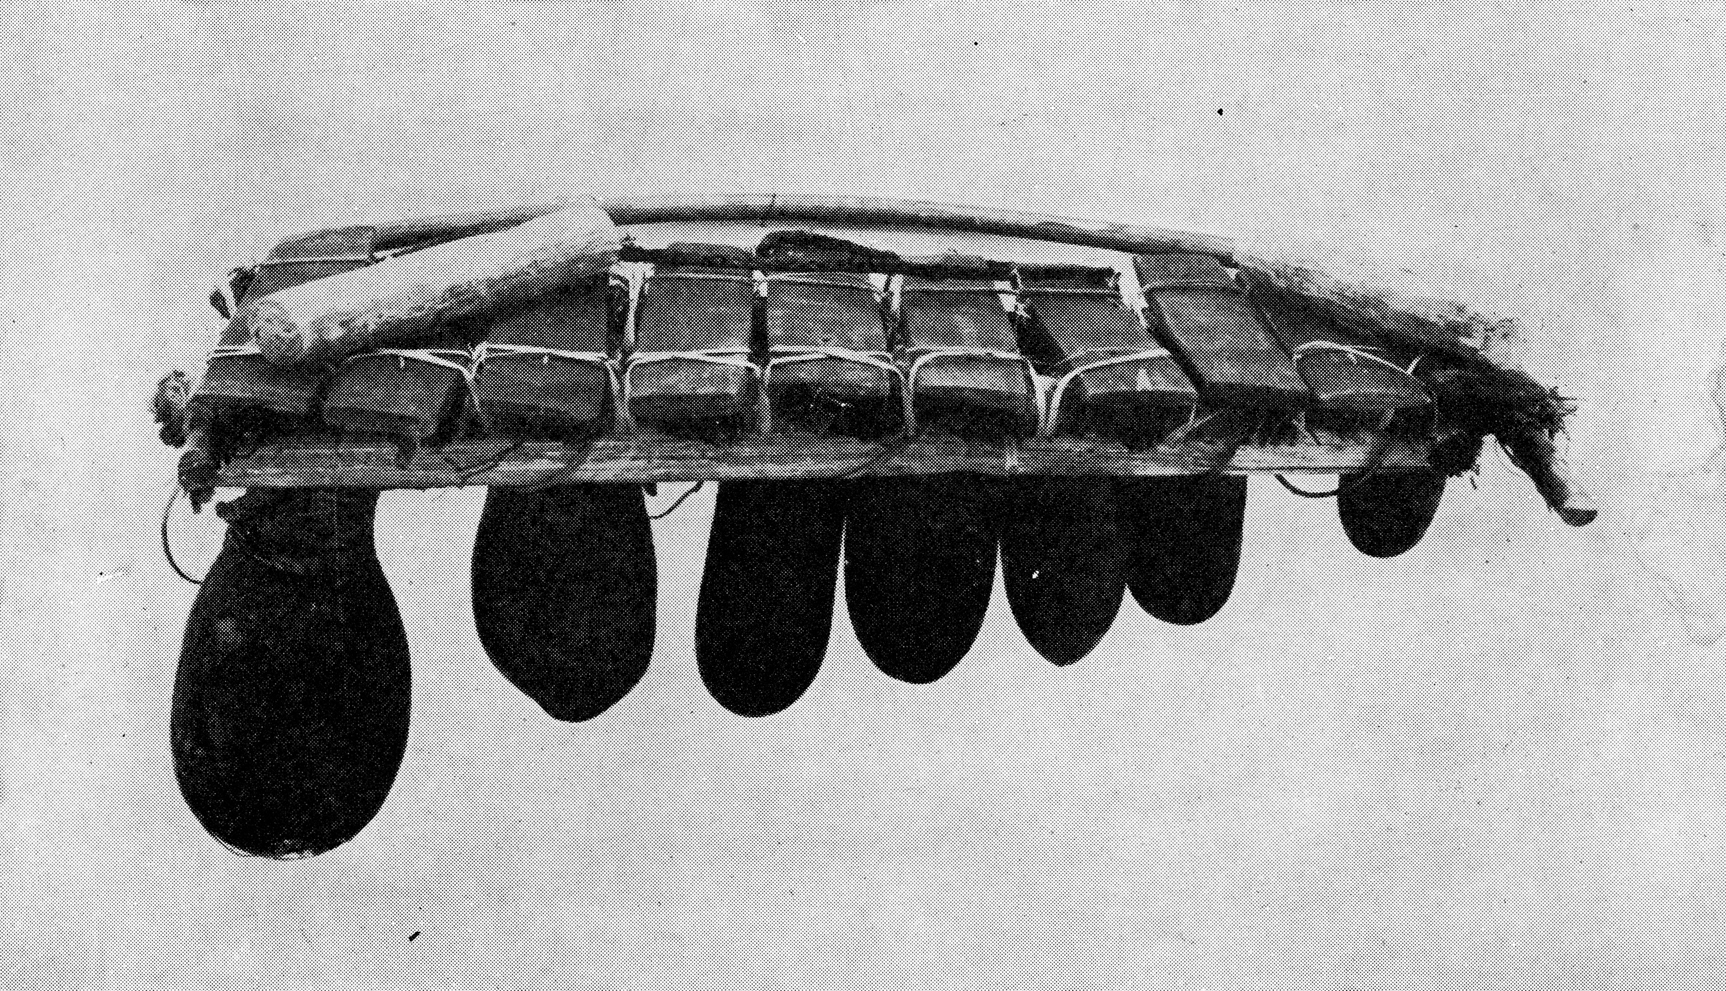 photograph of the marimba or xylophone